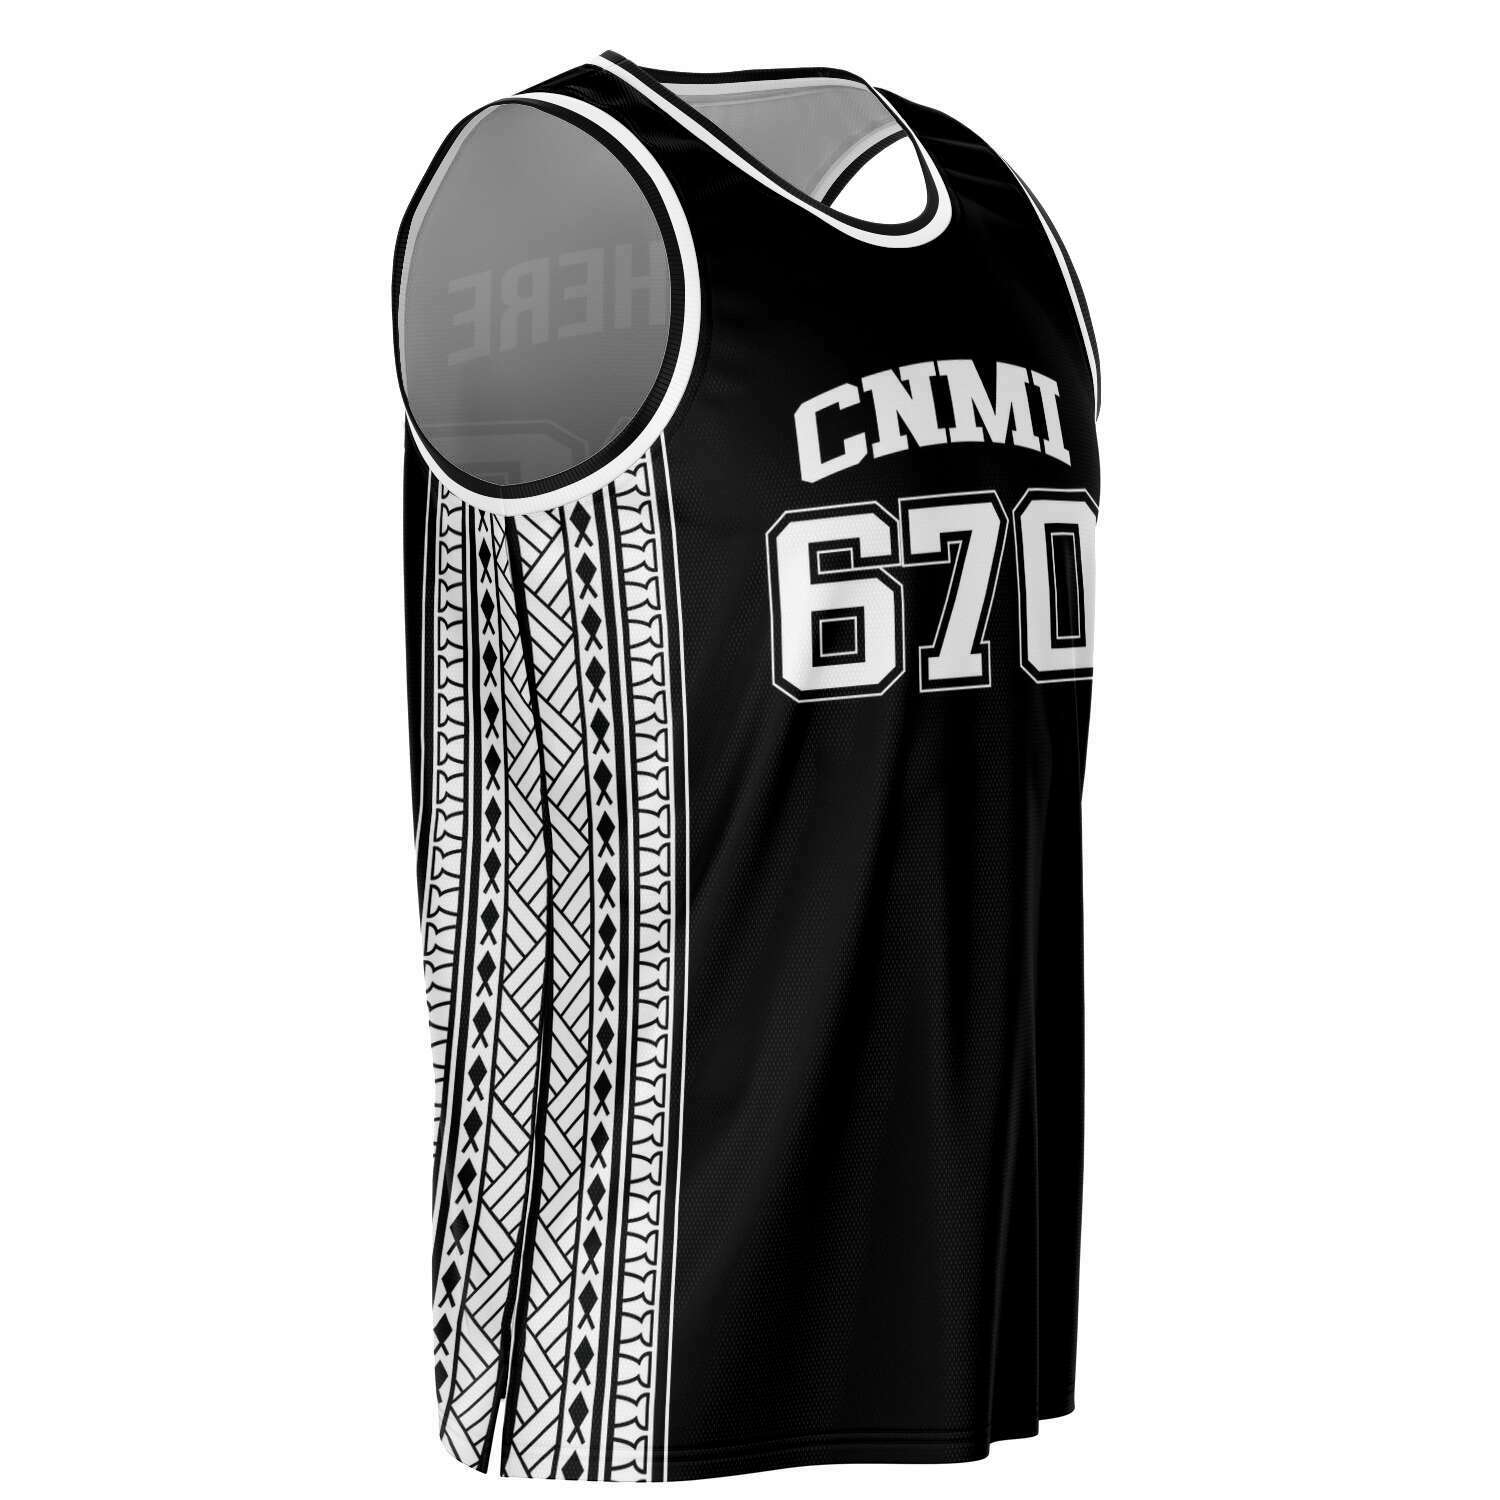 CNMI 670 Saipan Tribal Basketball Jersey with Personalization